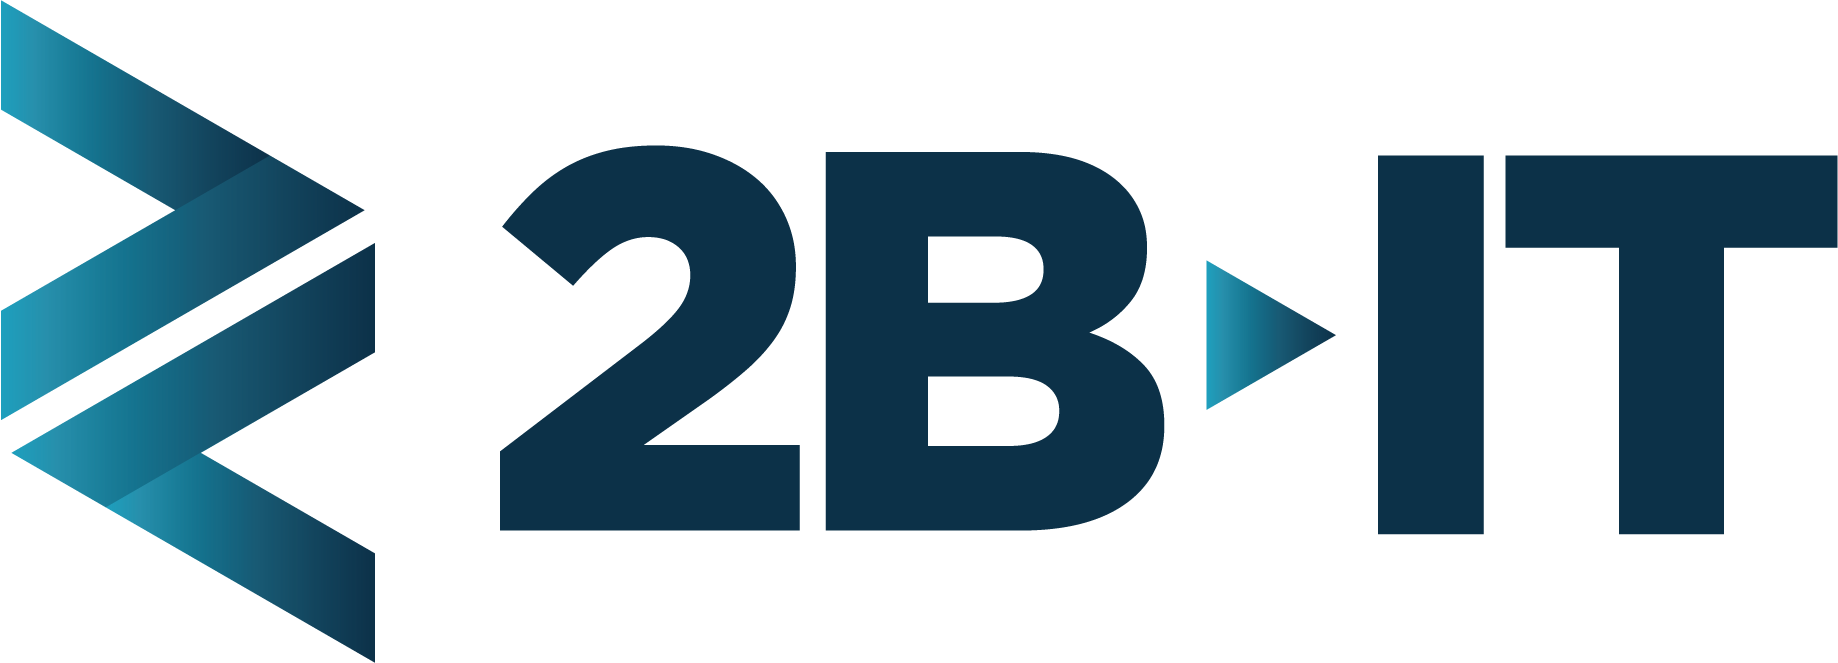 2B-IT logo